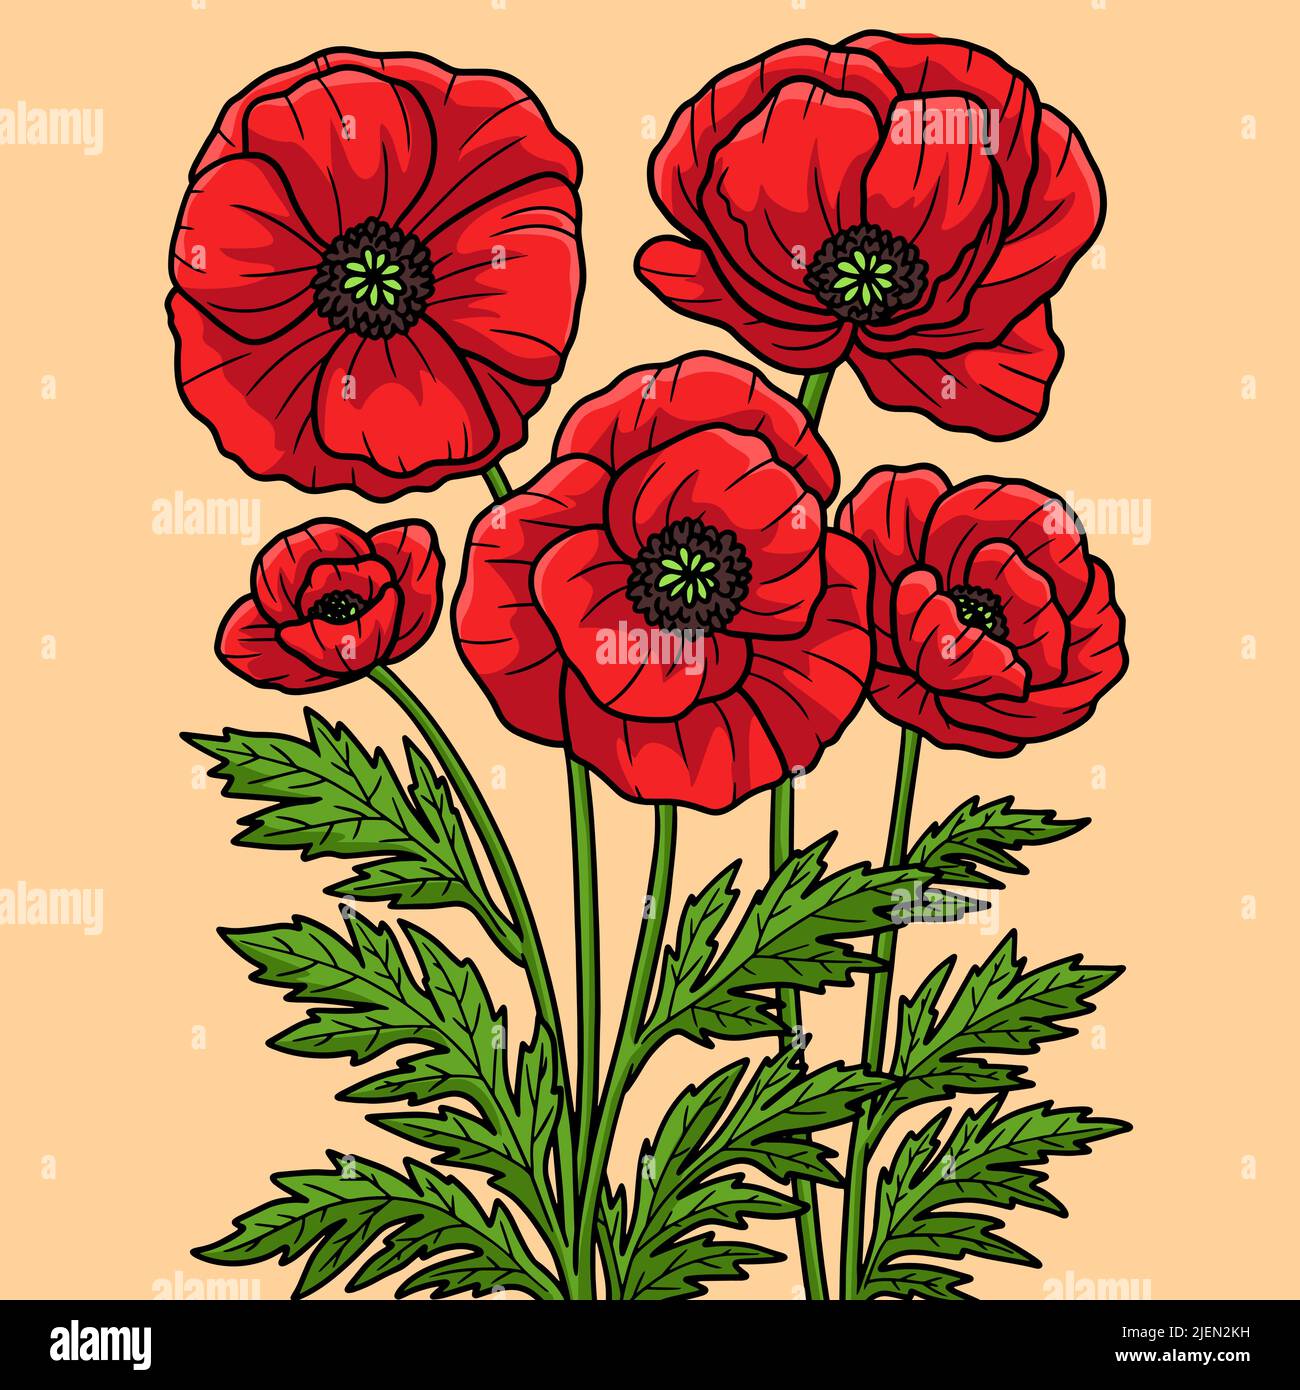 Corn Poppy Flower Colored Cartoon Illustration Stock Vector